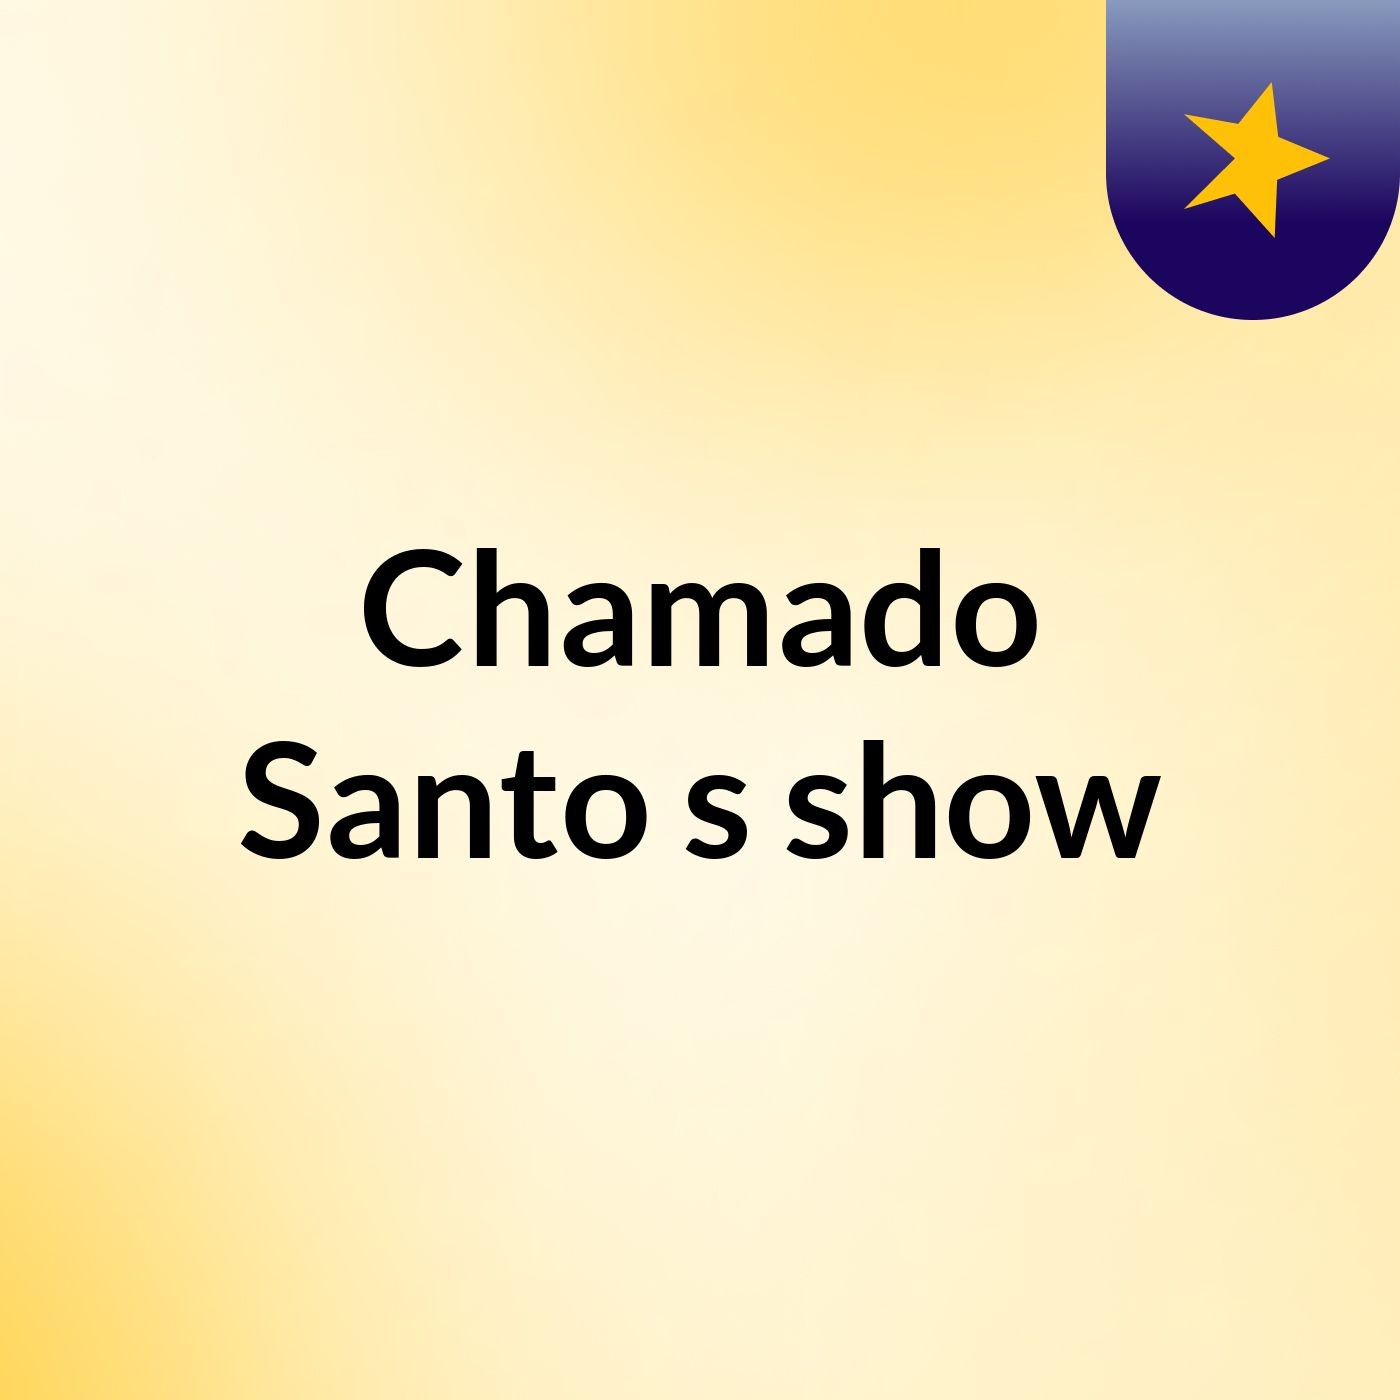 Chamado Santo's show